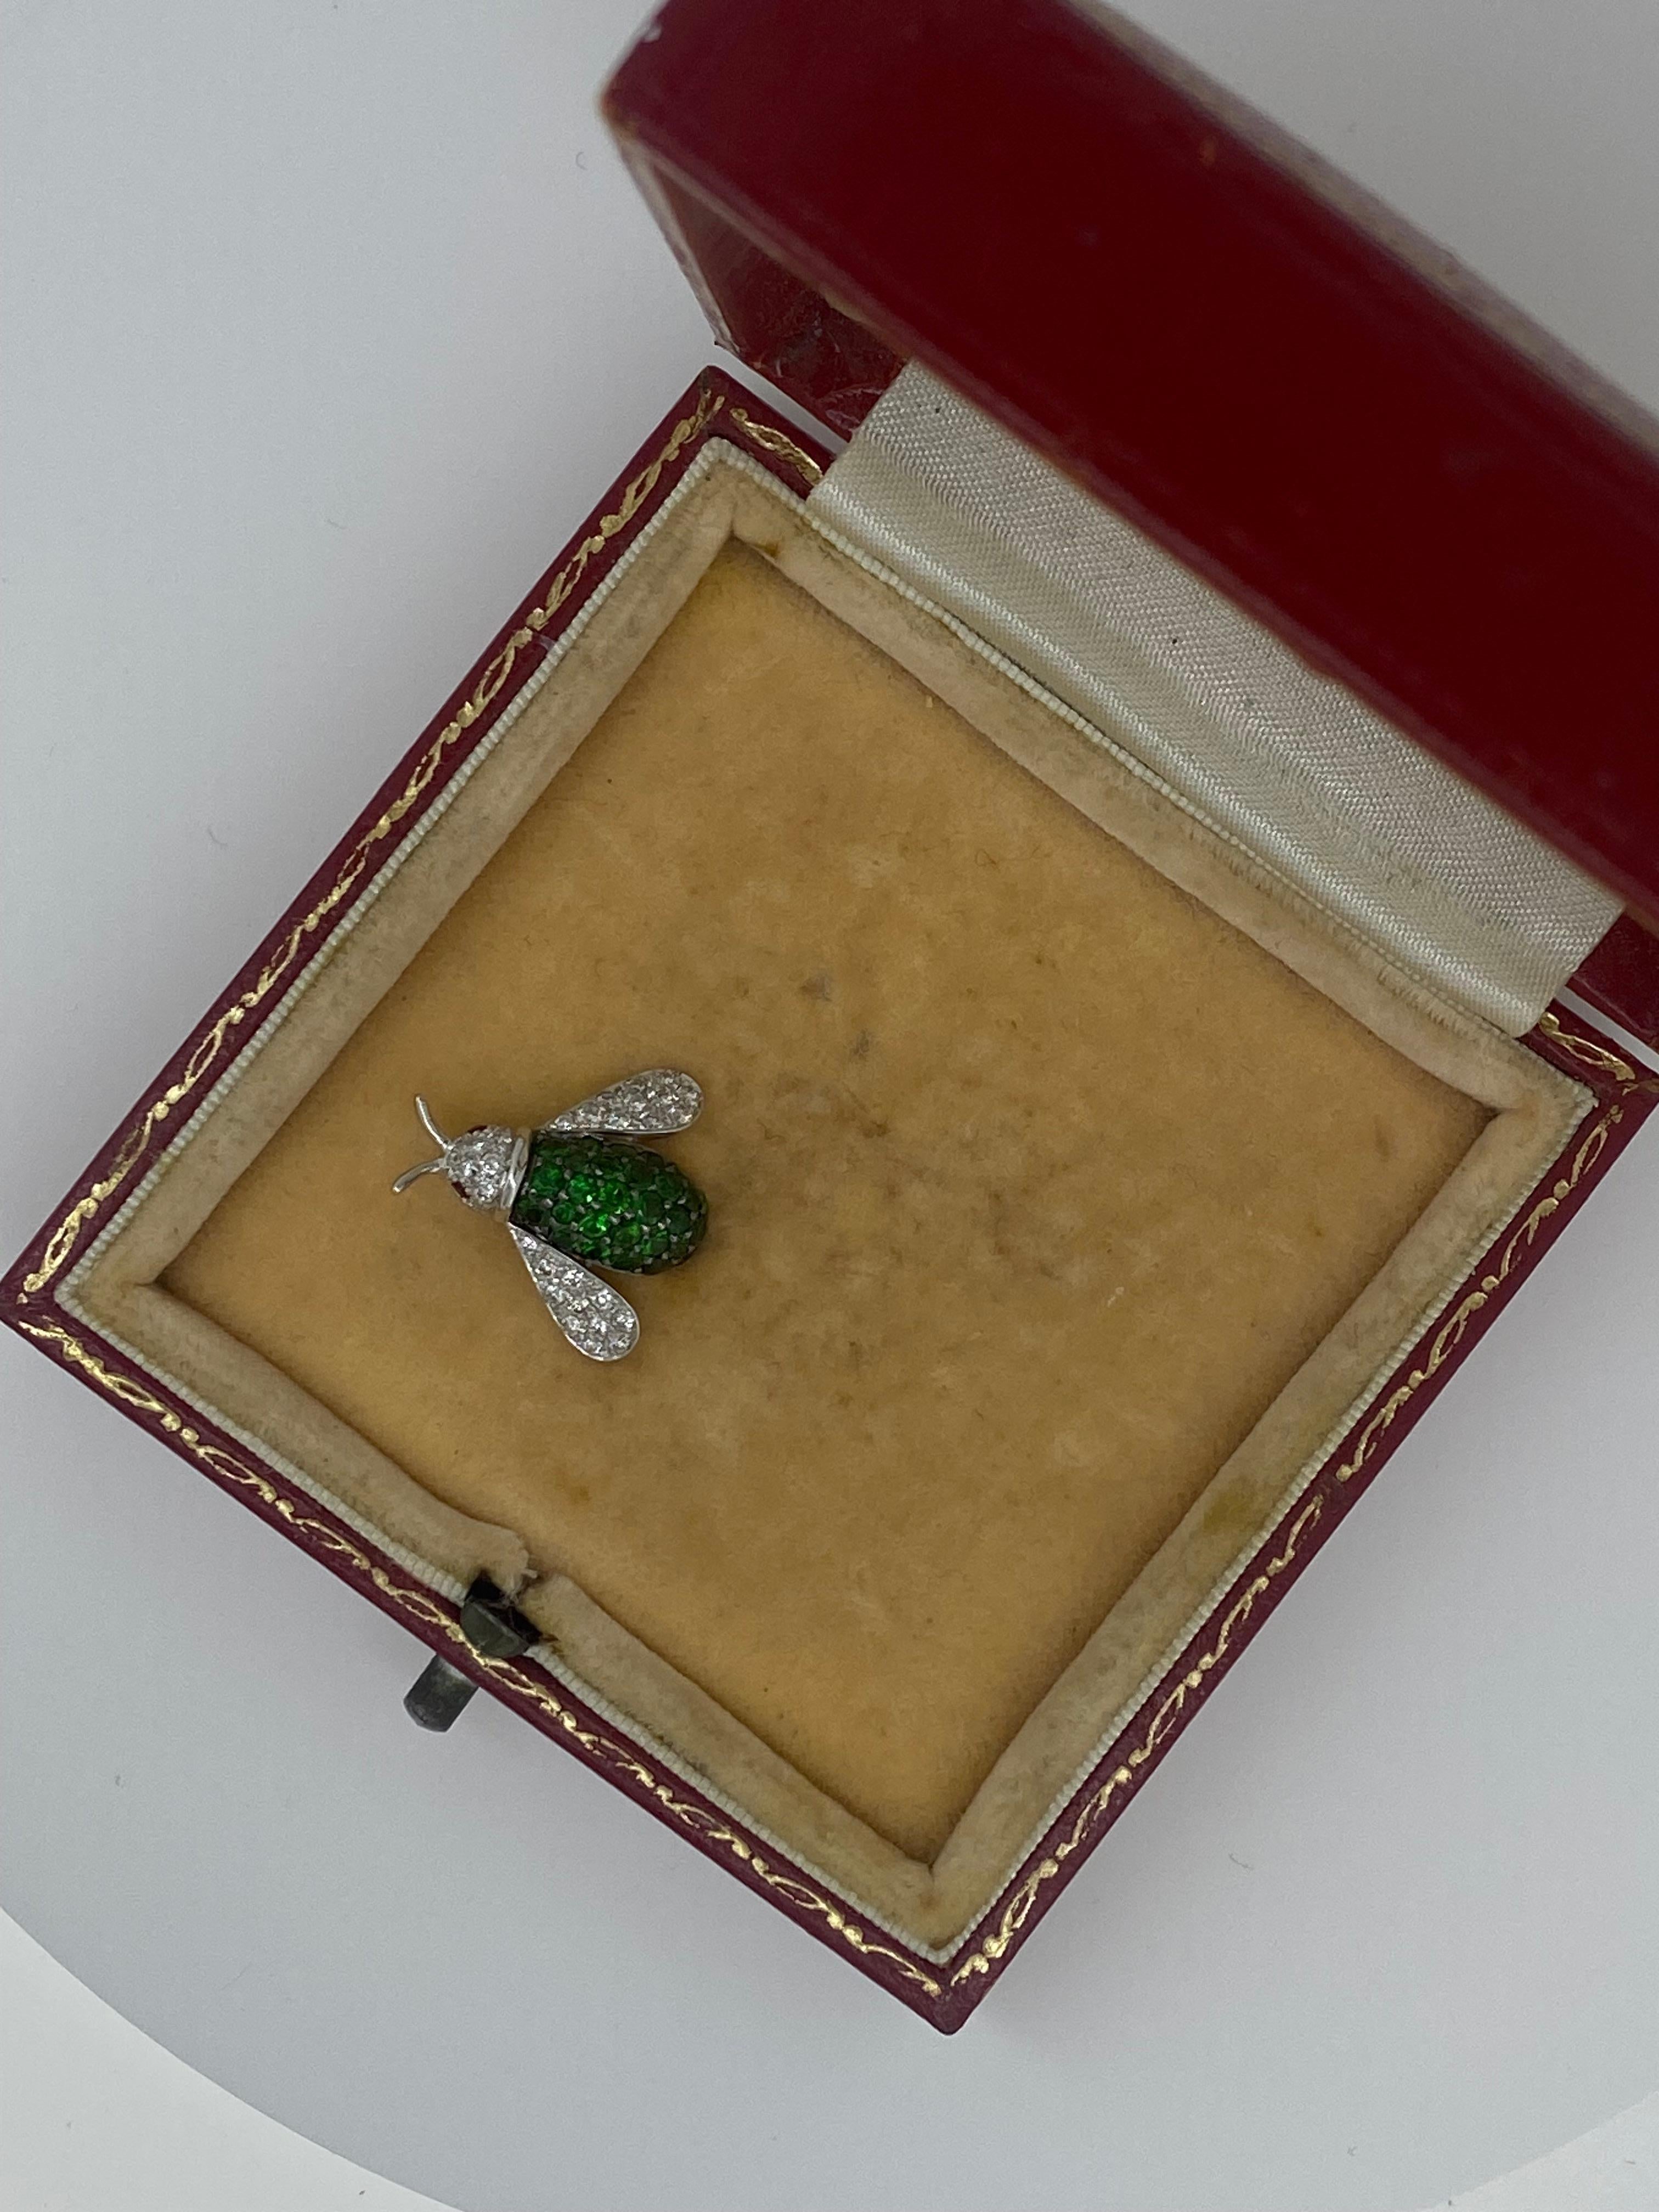 Superb Diamond, Tsavorite Garnet & Ruby Retro Bug Stick Pin in 18K White Gold For Sale 1